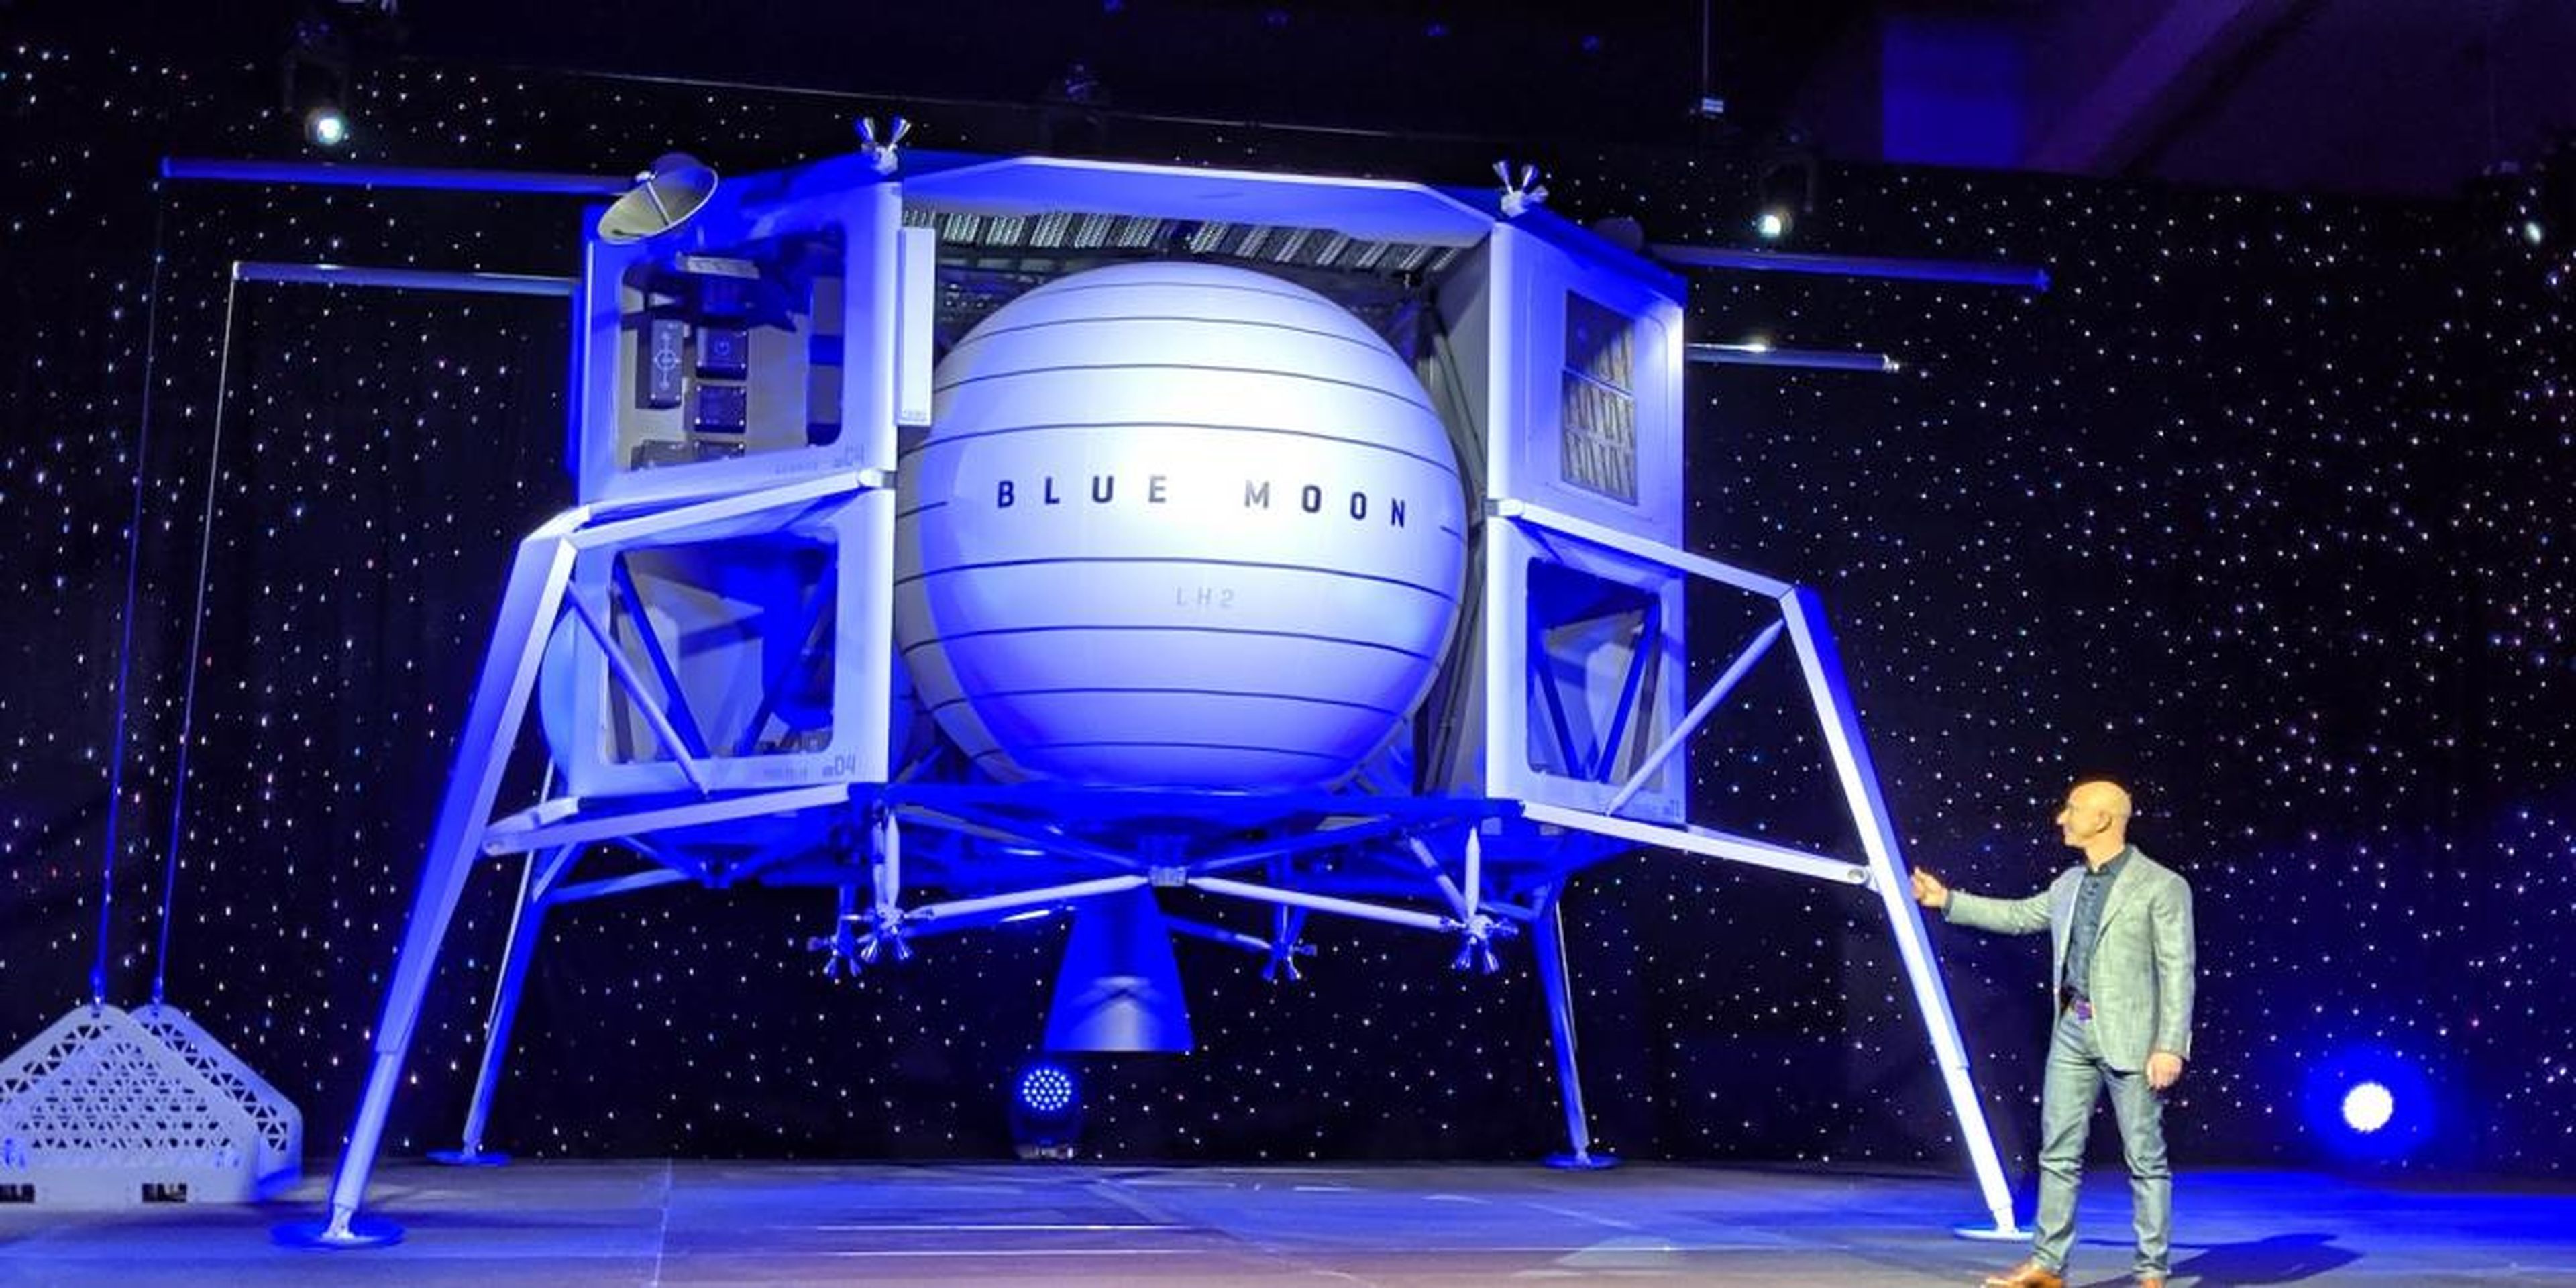 Jeff Bezos unveils a model of Blue Origin's "Blue Moon" lunar lander on May 9, 2019, in Washington DC.